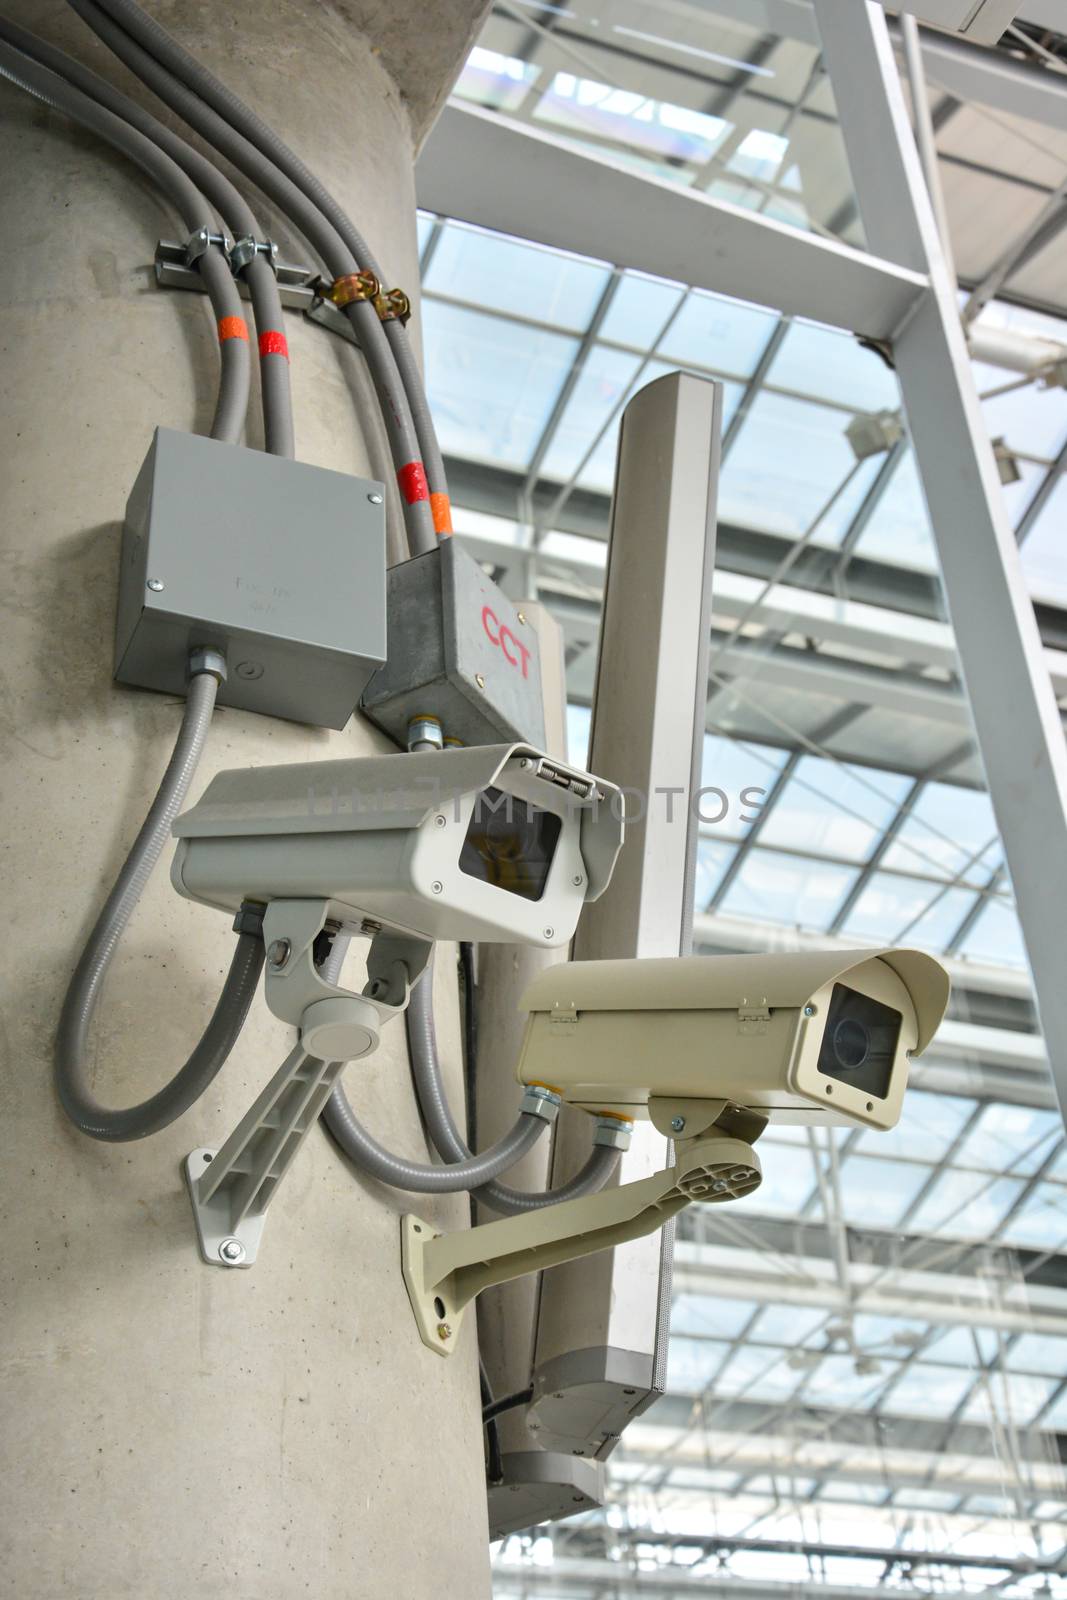 CCTV camera by shutterbird